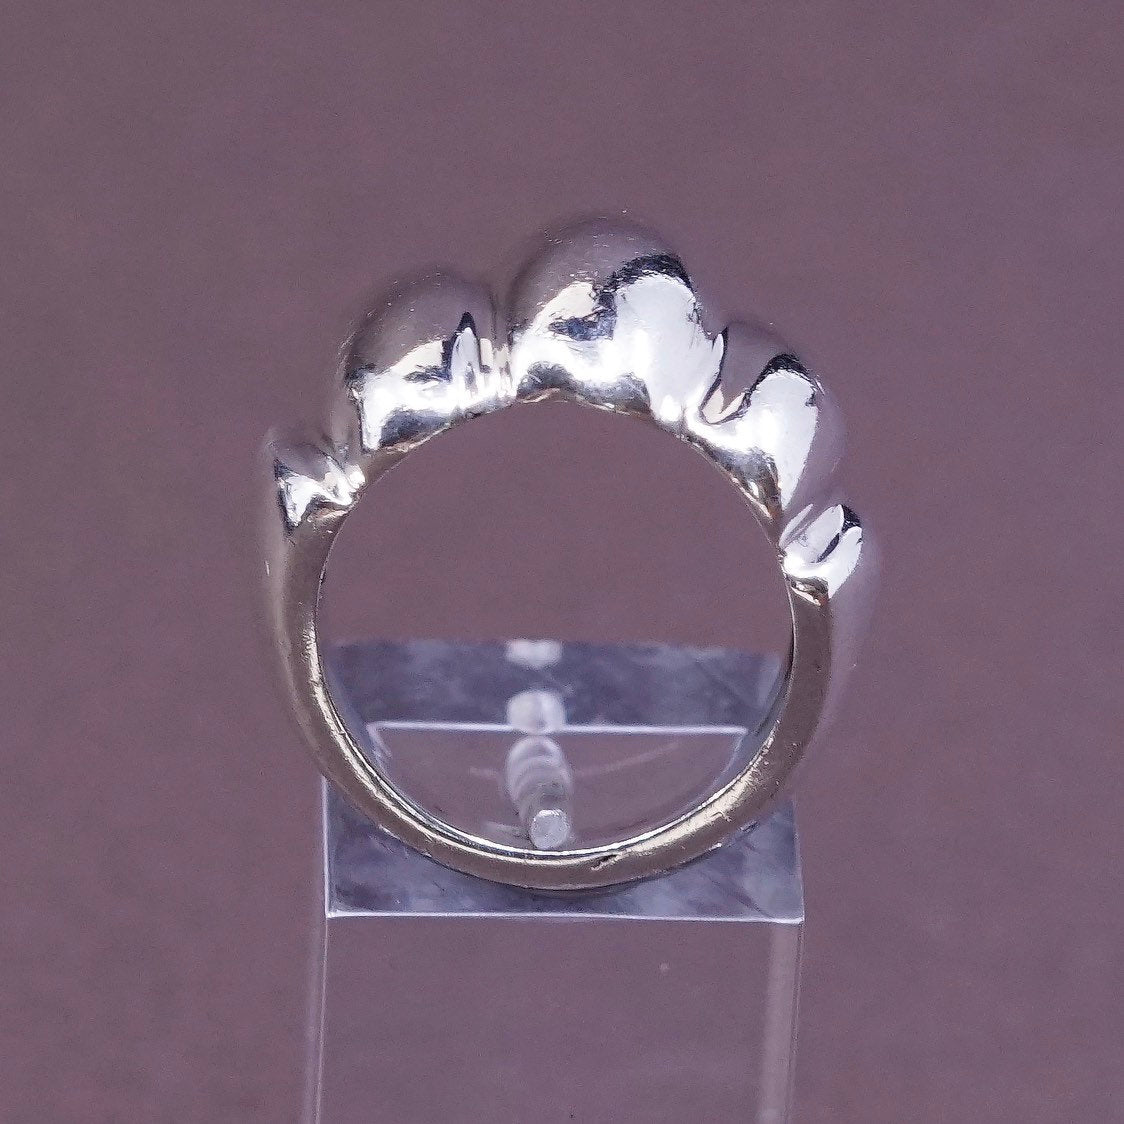 sz 7.25, vtg modern Sterling silver handmade ring, heavy 925 ribbed band